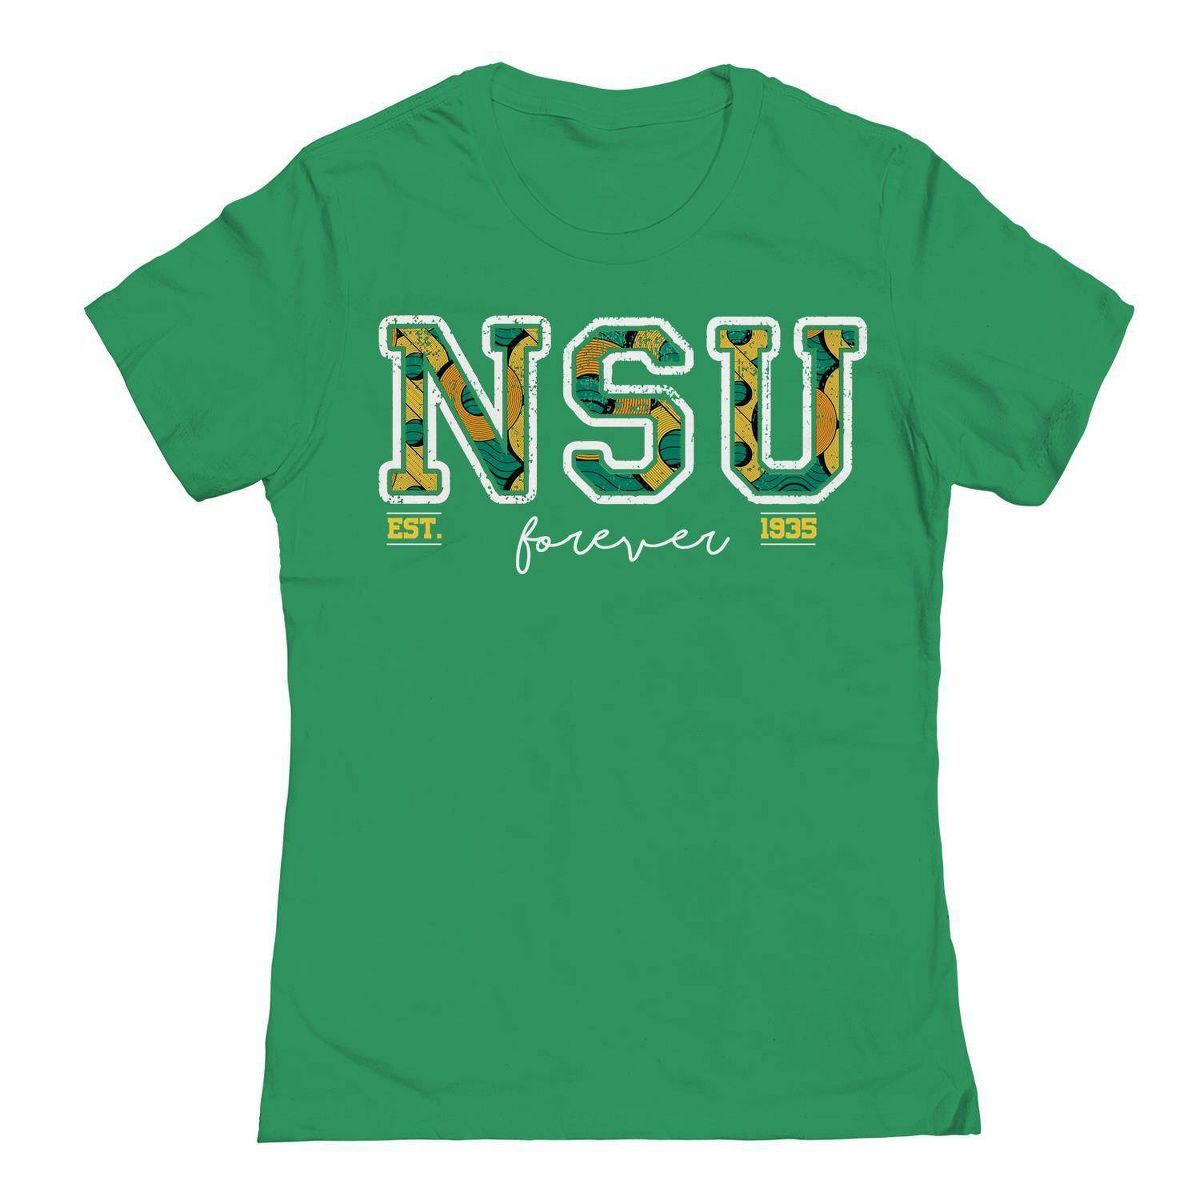 HBCU Culture Shop Norfolk State Spartans Forever Women's T-Shirt | Target